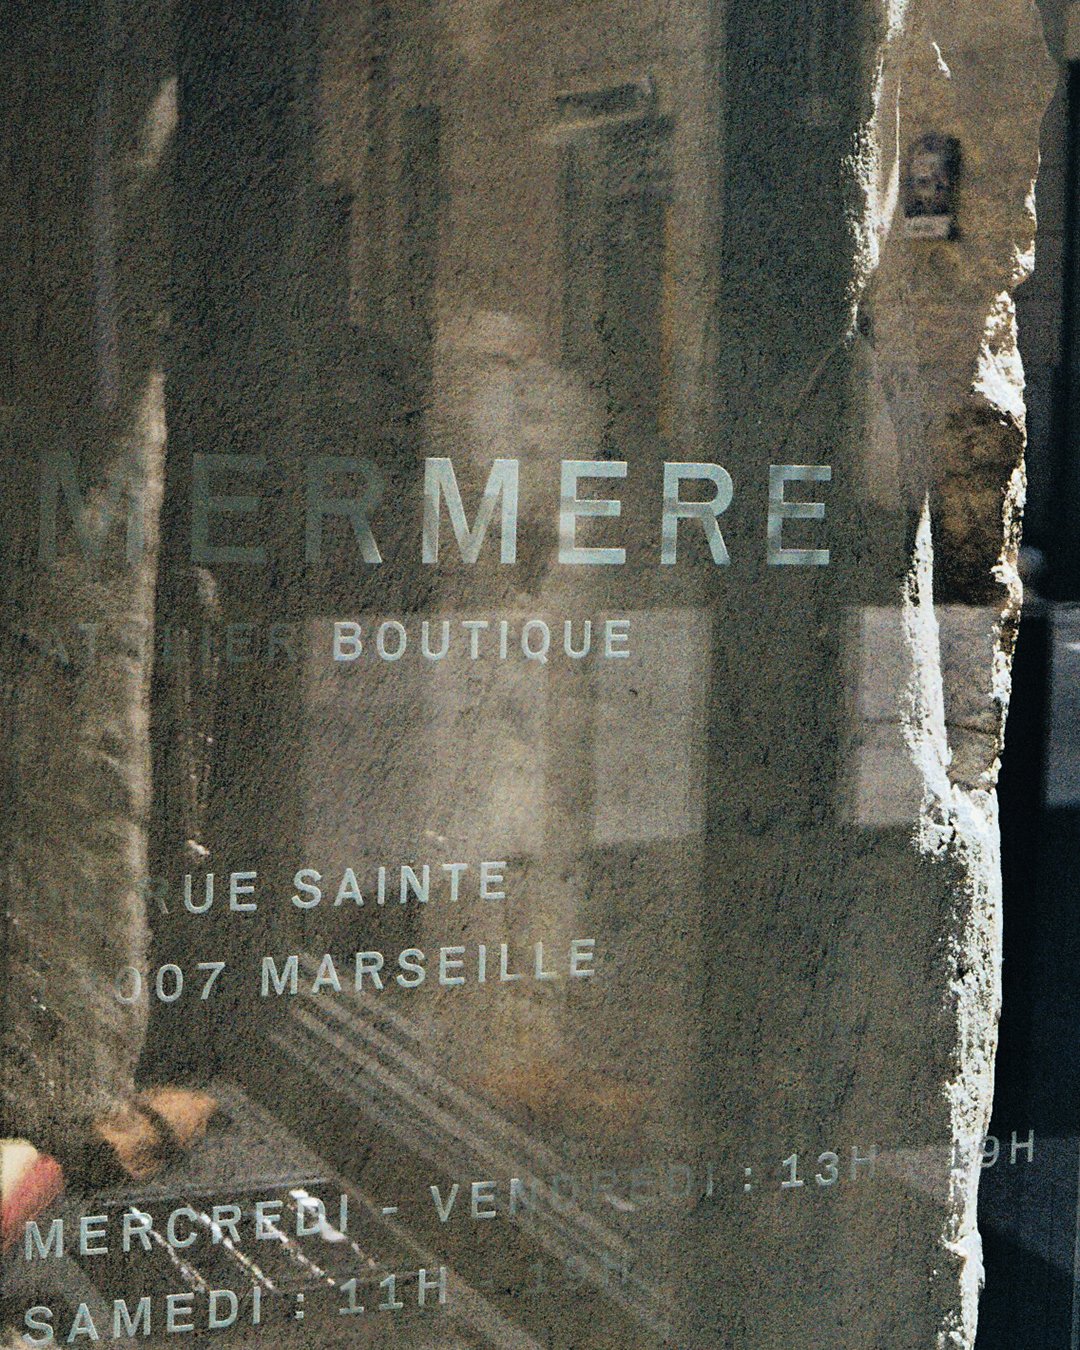 BoutiqueMermere3.jpg